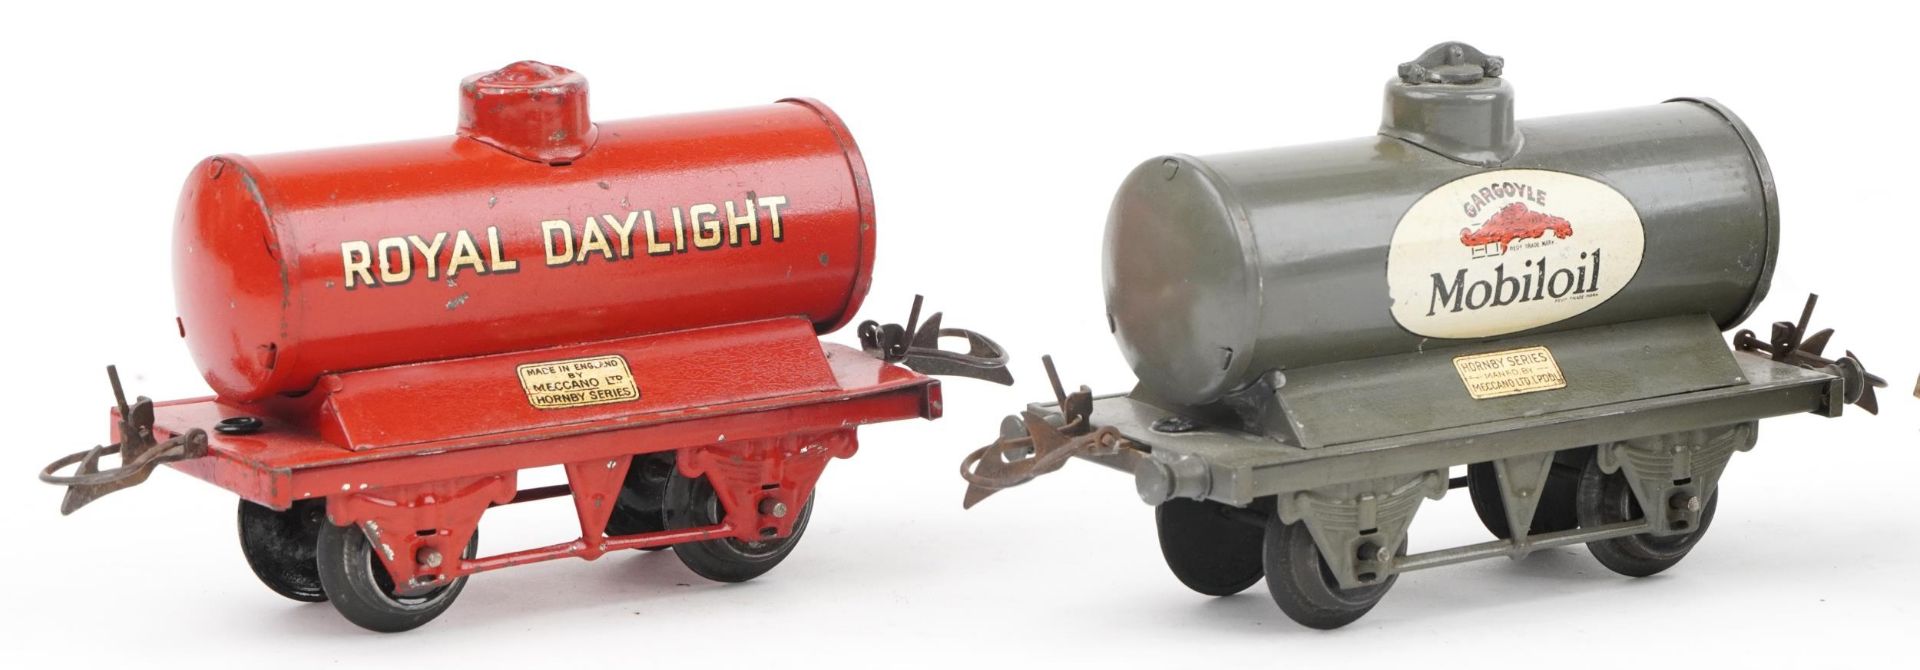 Four Hornby O gauge tinplate model railway advertising tankers comprising Pratt's Motor Spirit, - Image 2 of 5